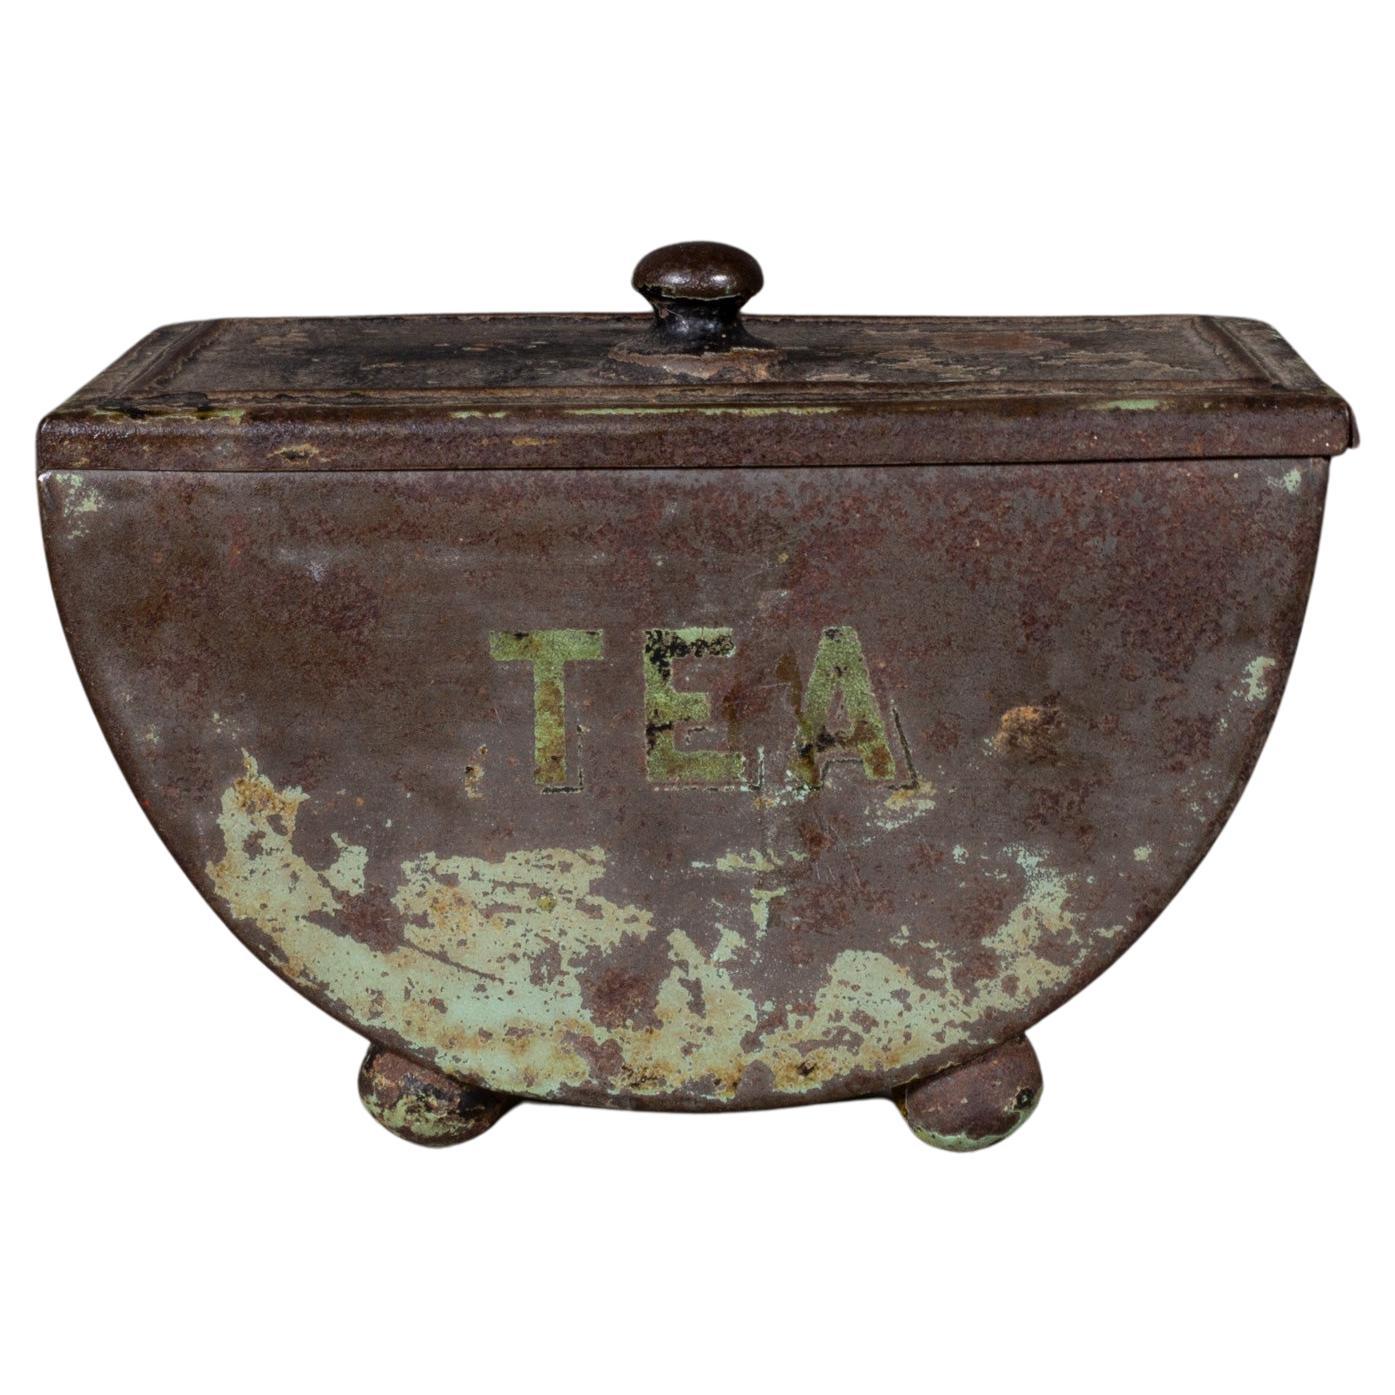 19th c. English Toleware Tea Bin c.mid-1800s (FREE SHIPPING)